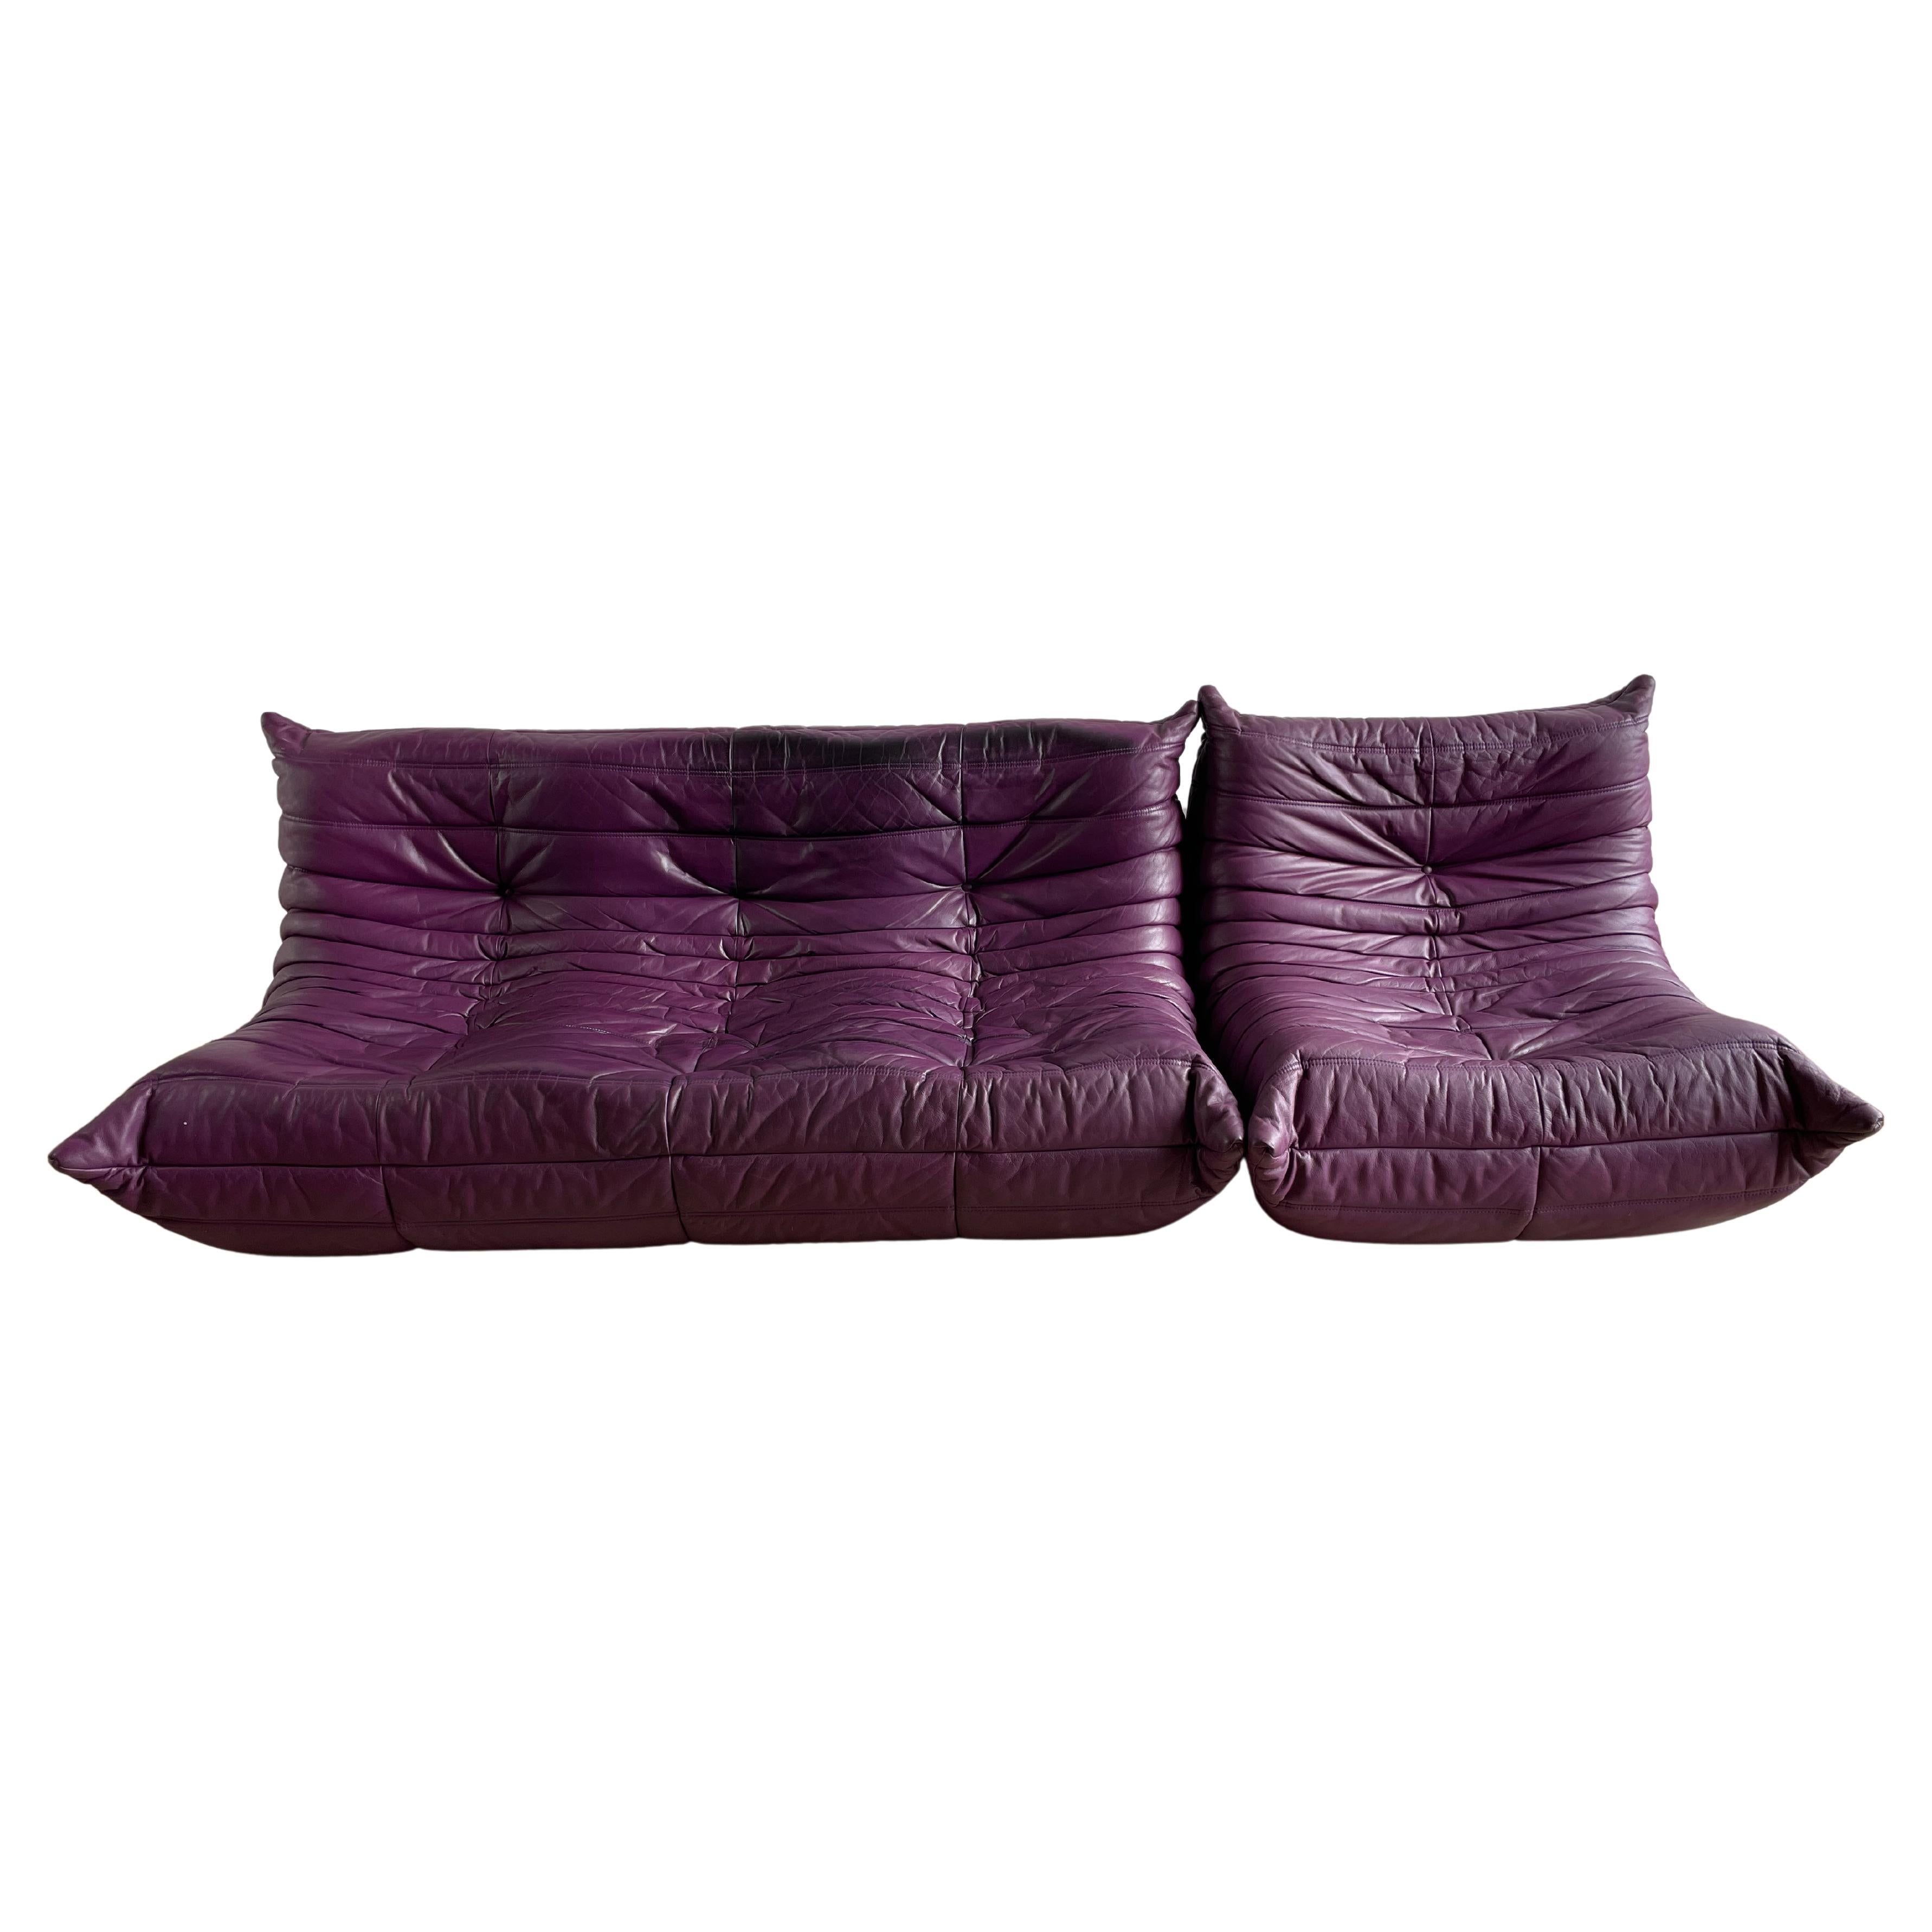 Ligne Roset by Michel Ducaroy Togo Burgundy Leather Modular Sofa Set of 2